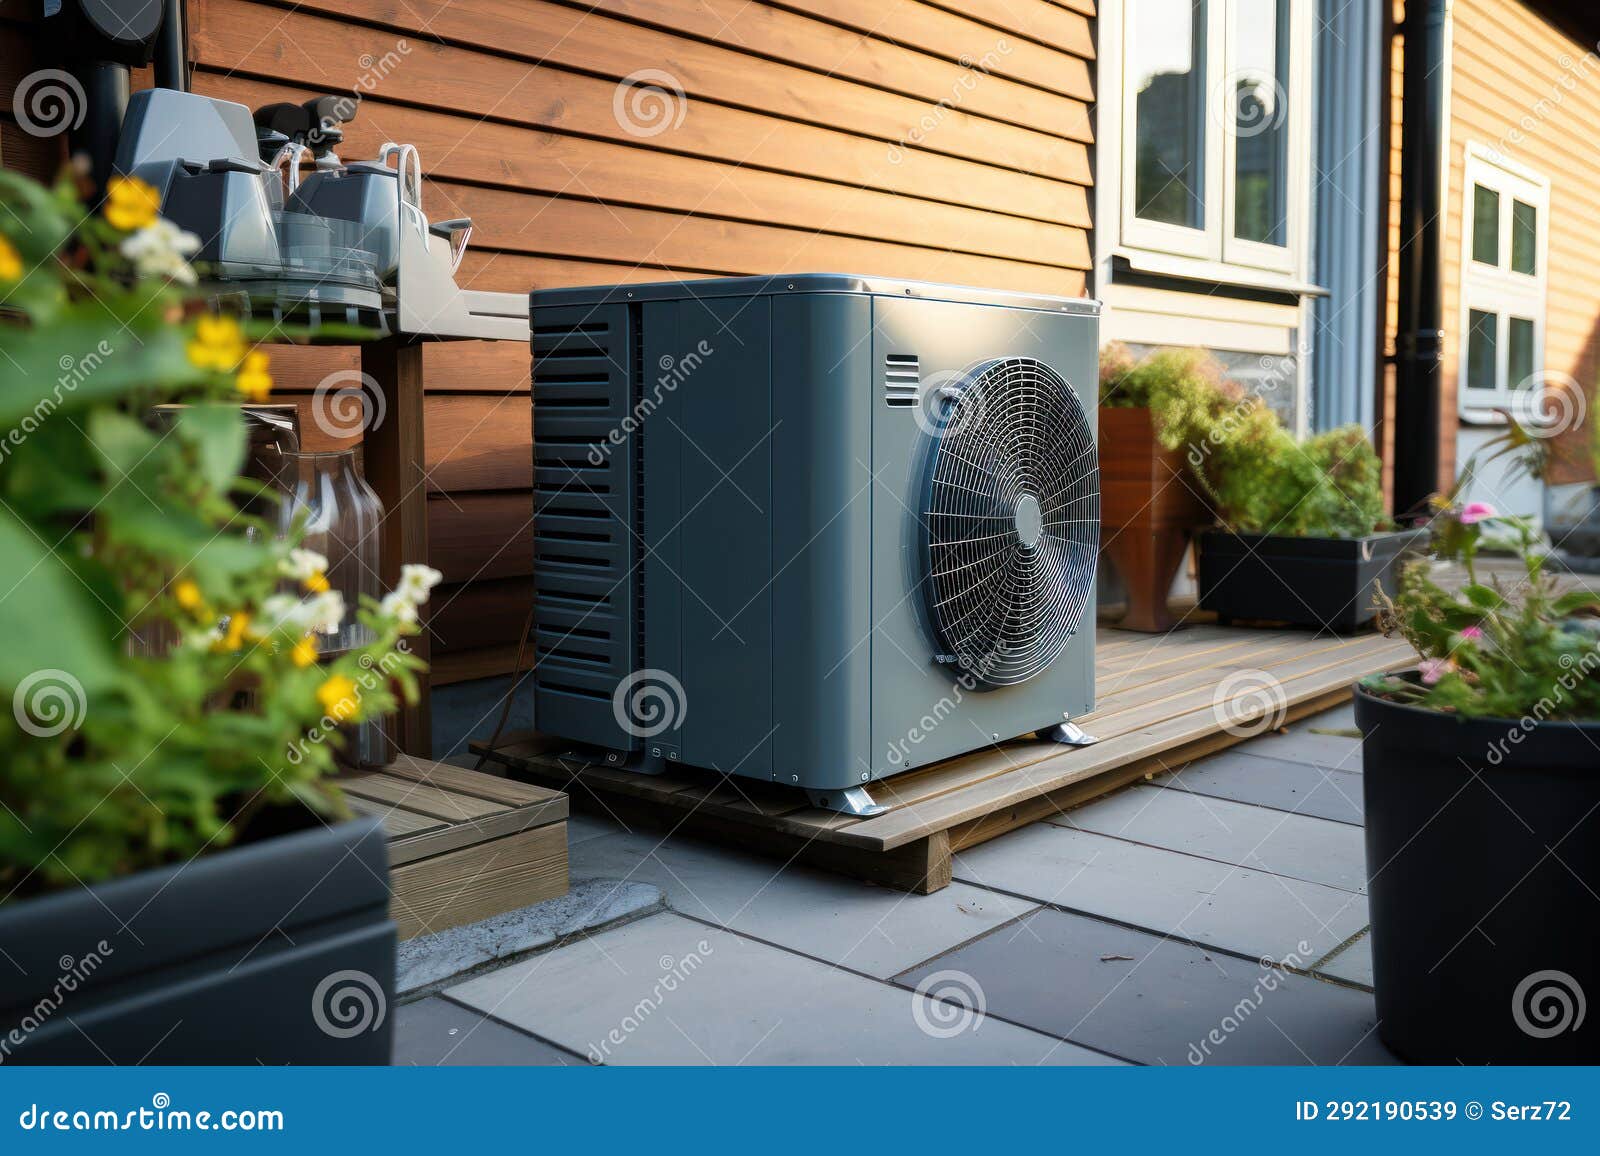 outdoor unit of air source heat pump